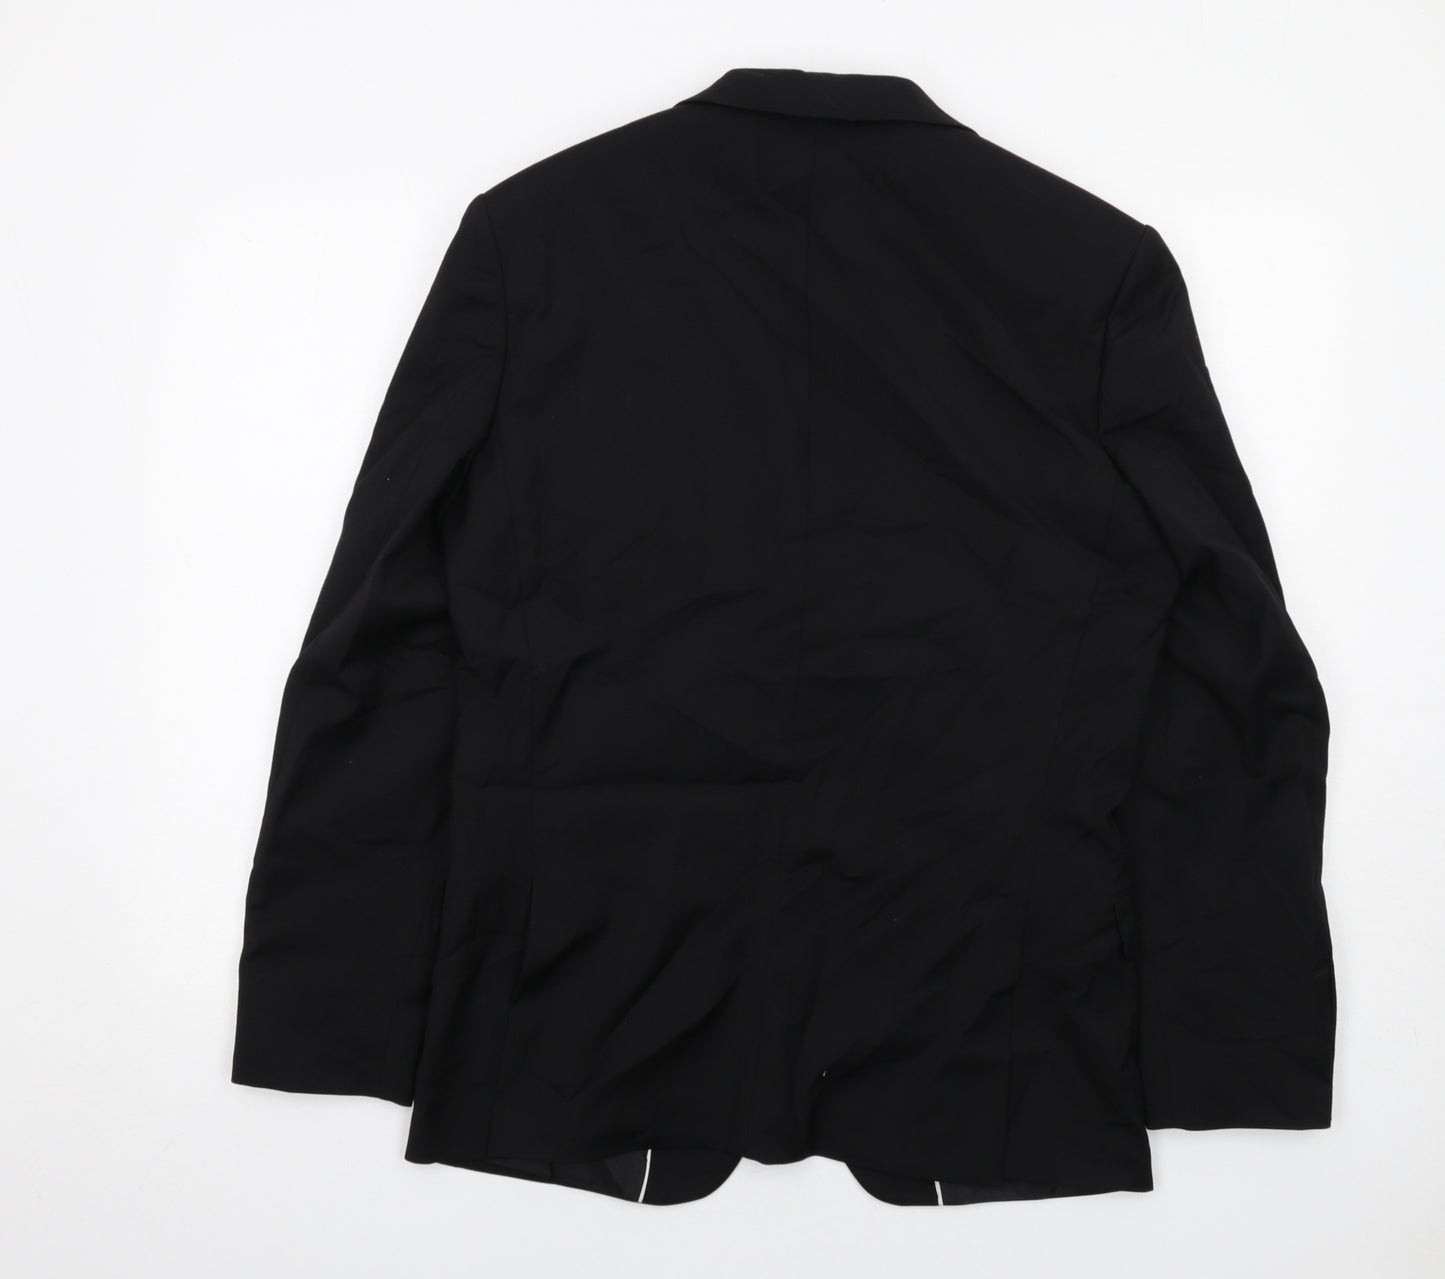 Jeff Banks Mens Black Wool Jacket Suit Jacket Size 38 Regular